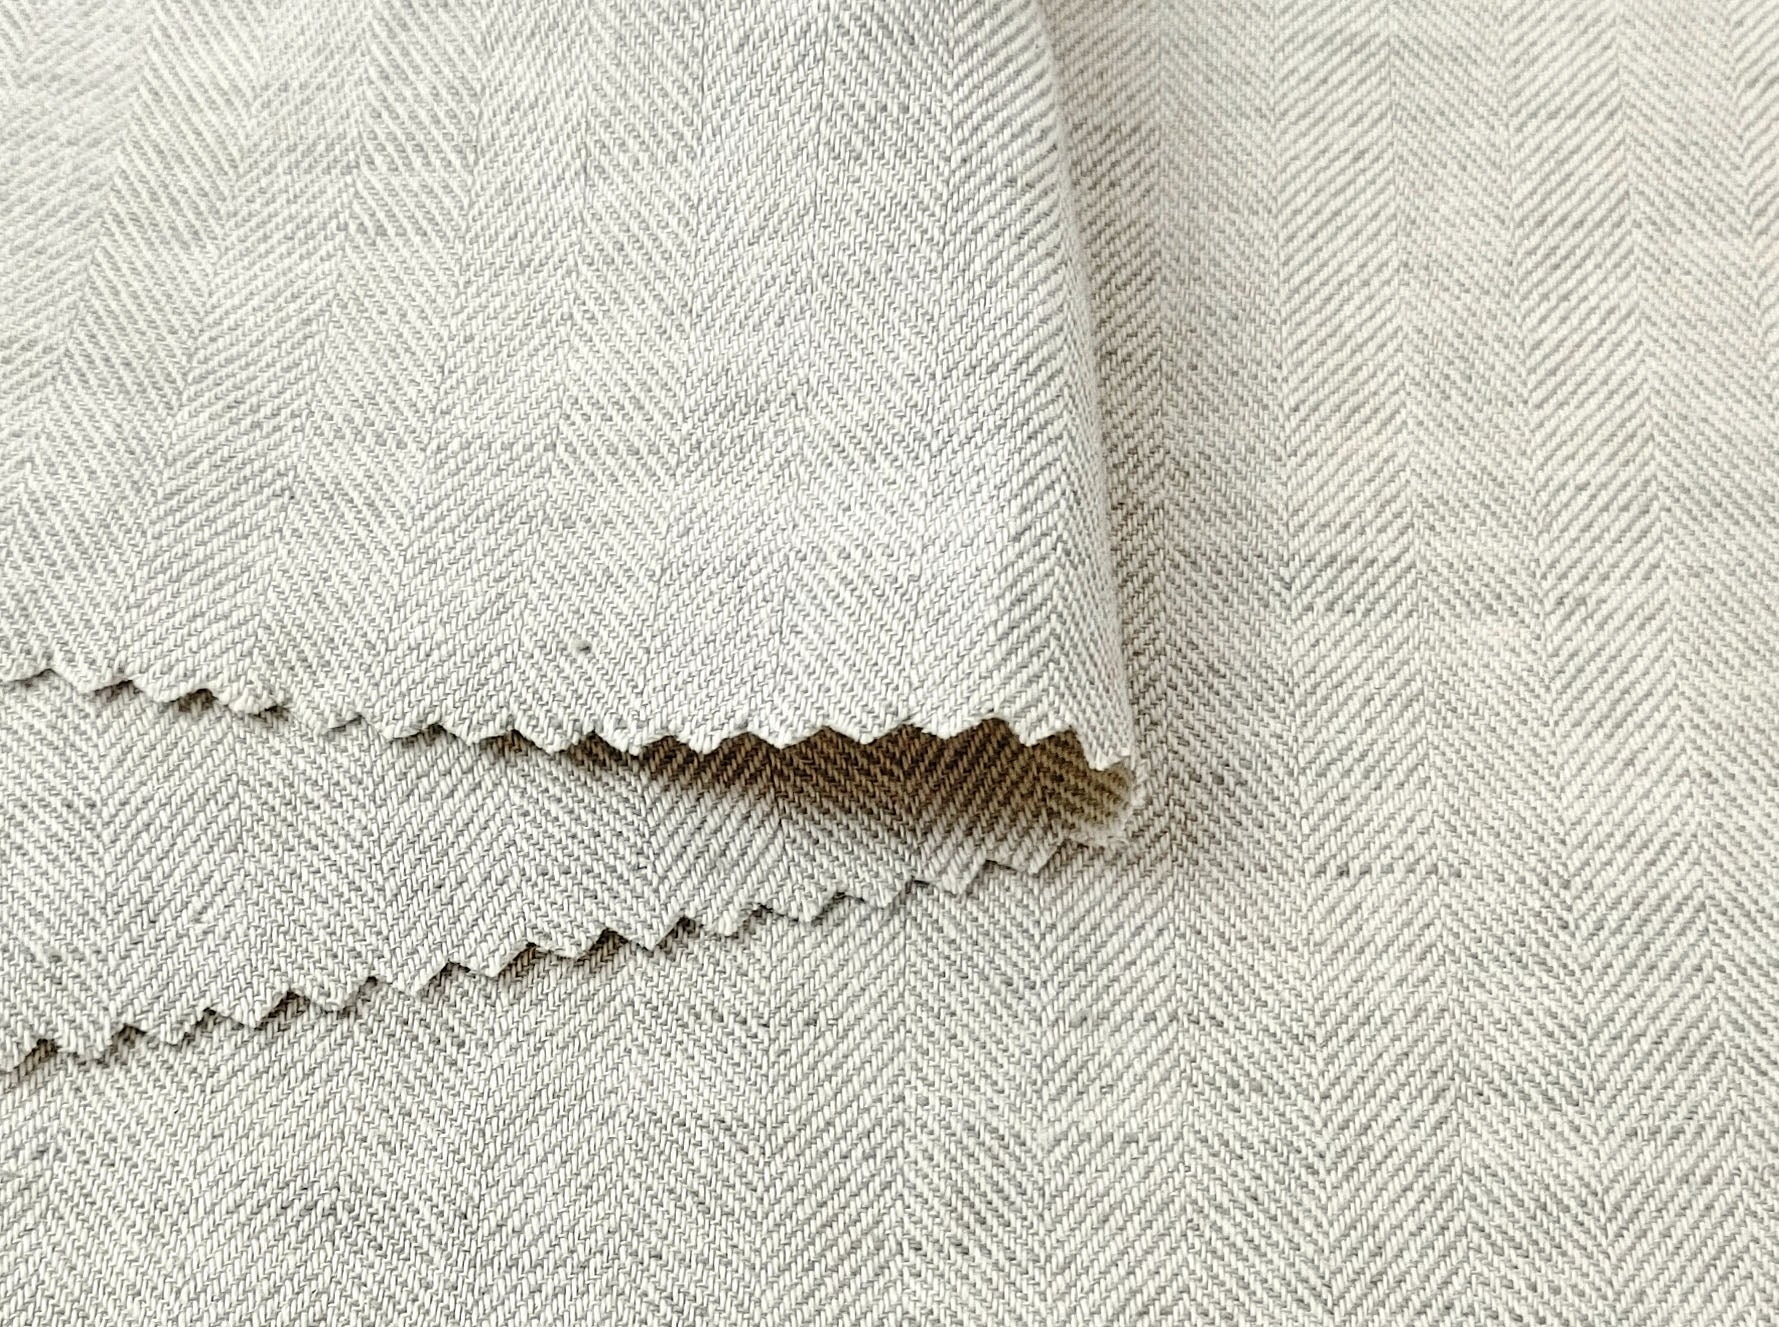 Linen Cotton Chambray Herringbone Twill (HBT) Fabric 7169 7170 7344 - The Linen Lab - Grey(light)